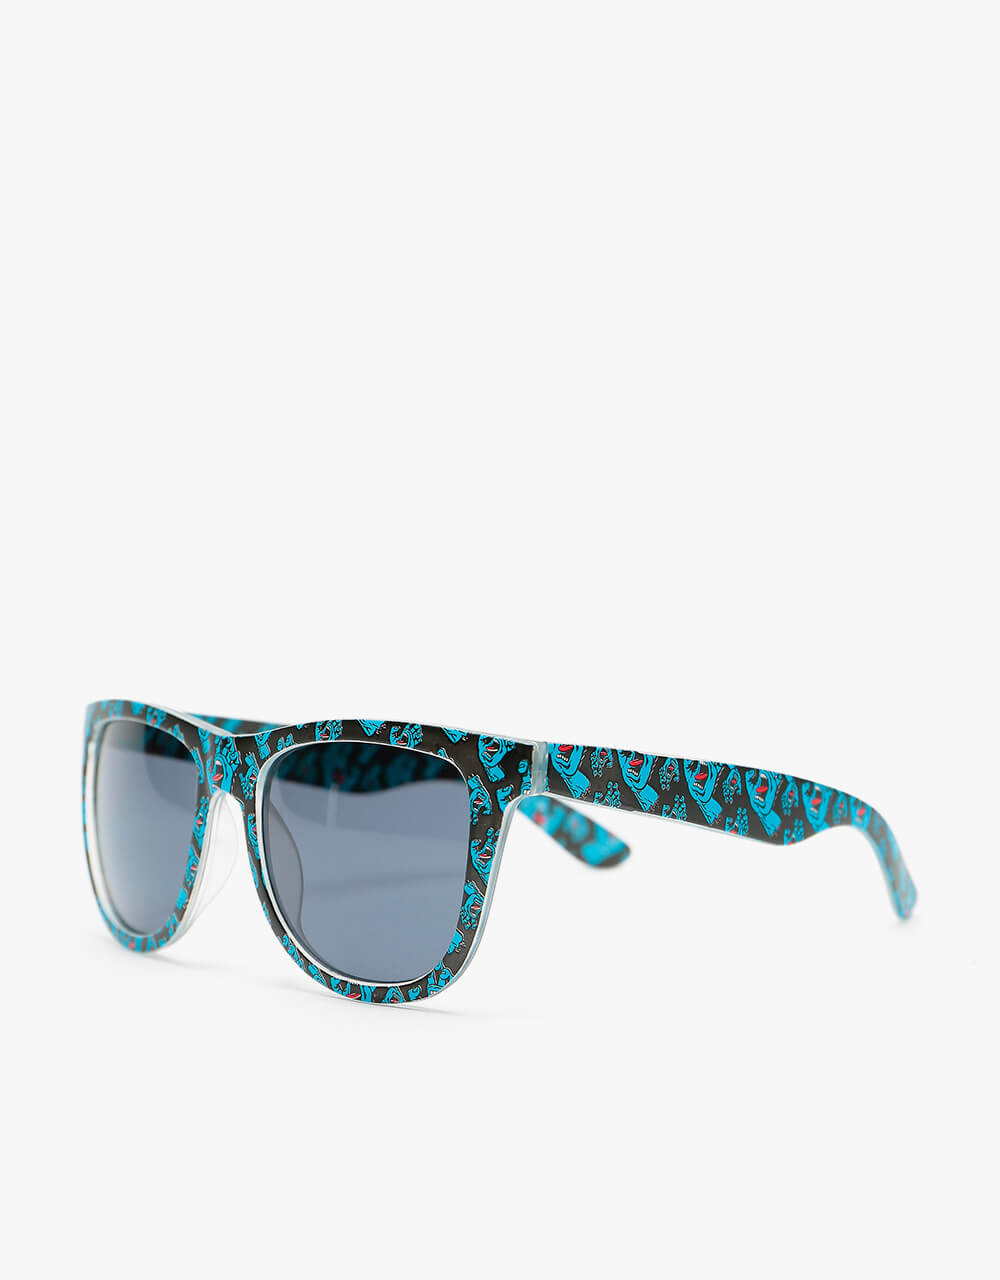 Santa Cruz Multi Hand Sunglasses - Black/Blue